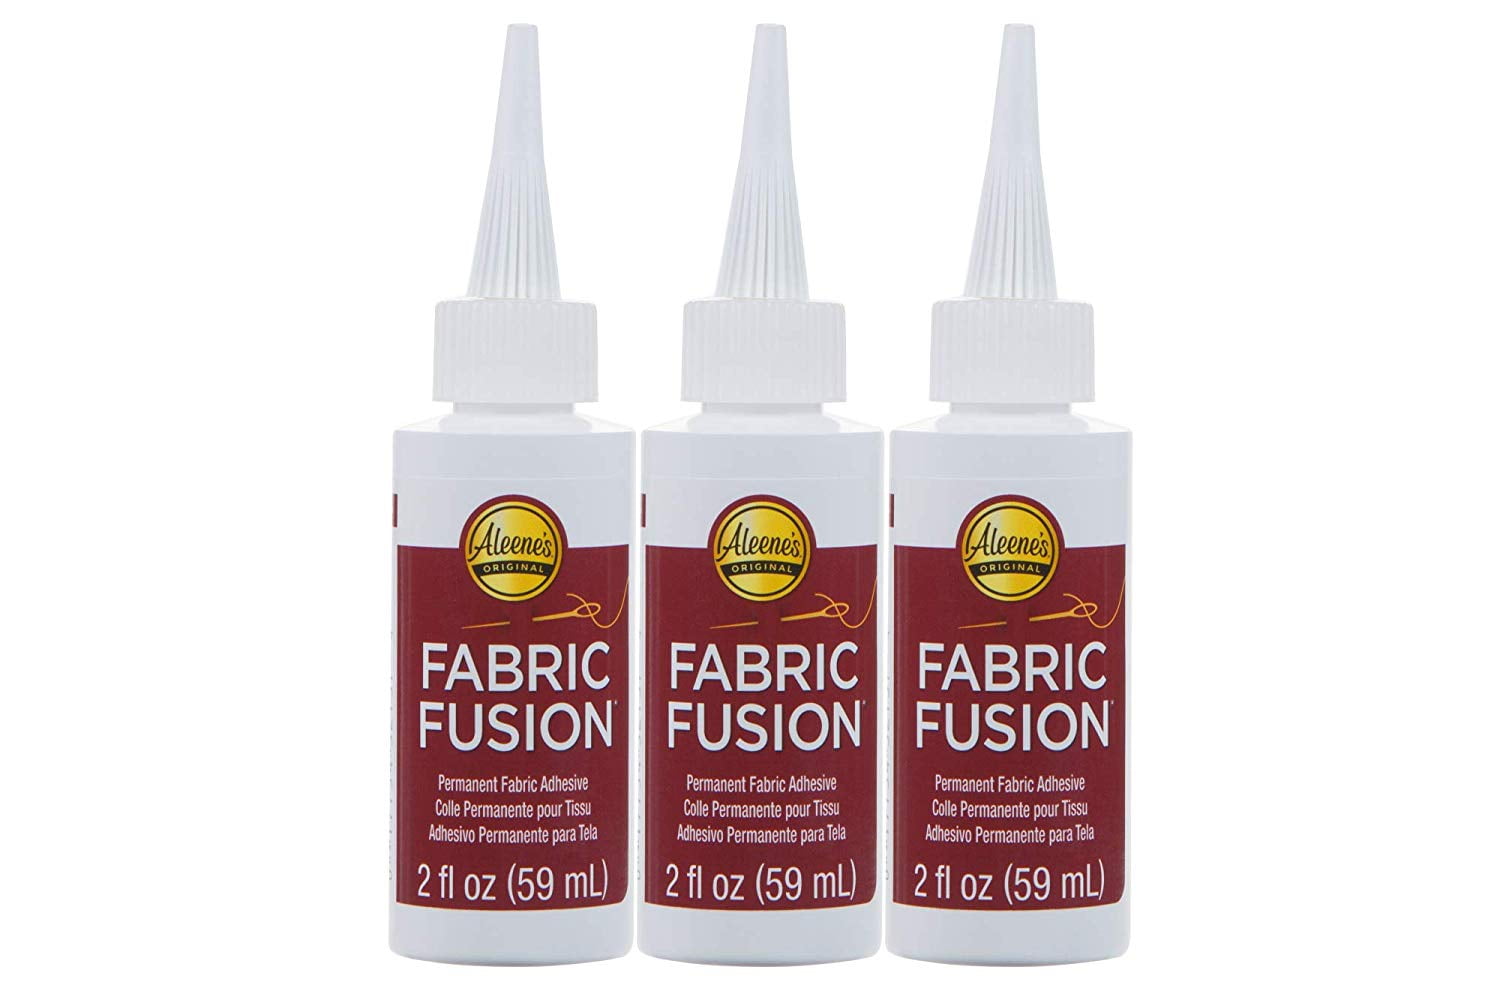 Aleene's Fabric Fusion Permanent Fabric Adhesive Glue 4oz.